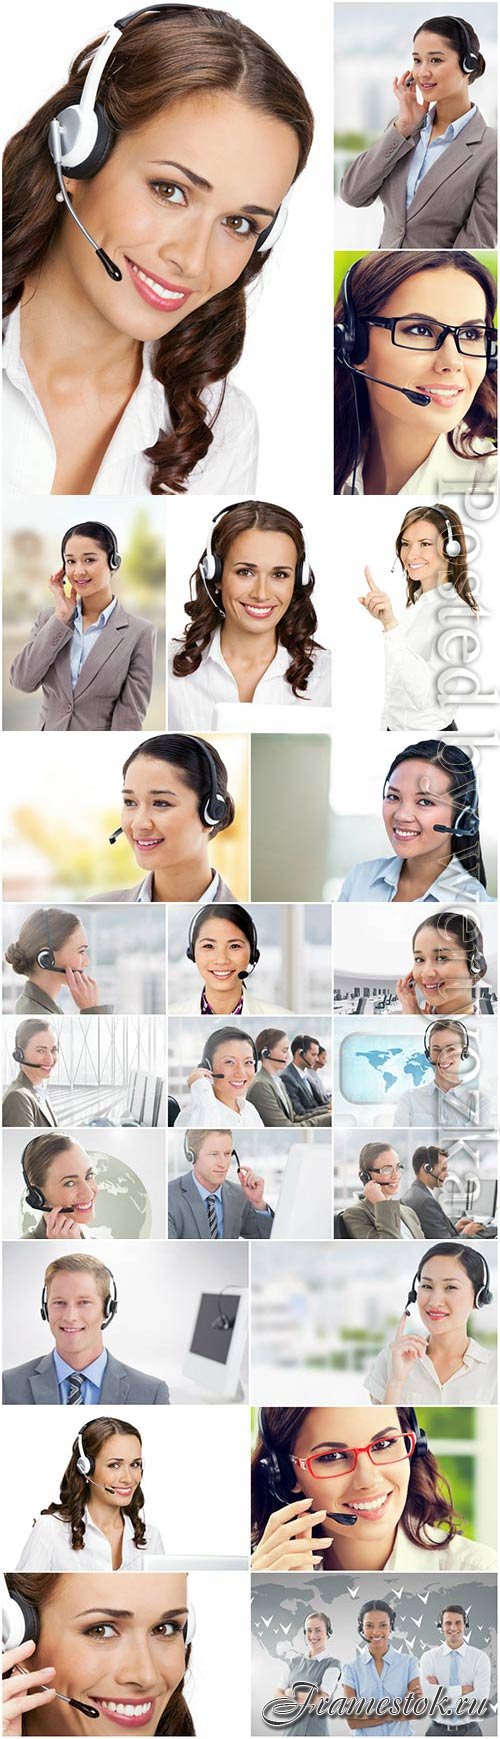 Smiling female operators stock photo